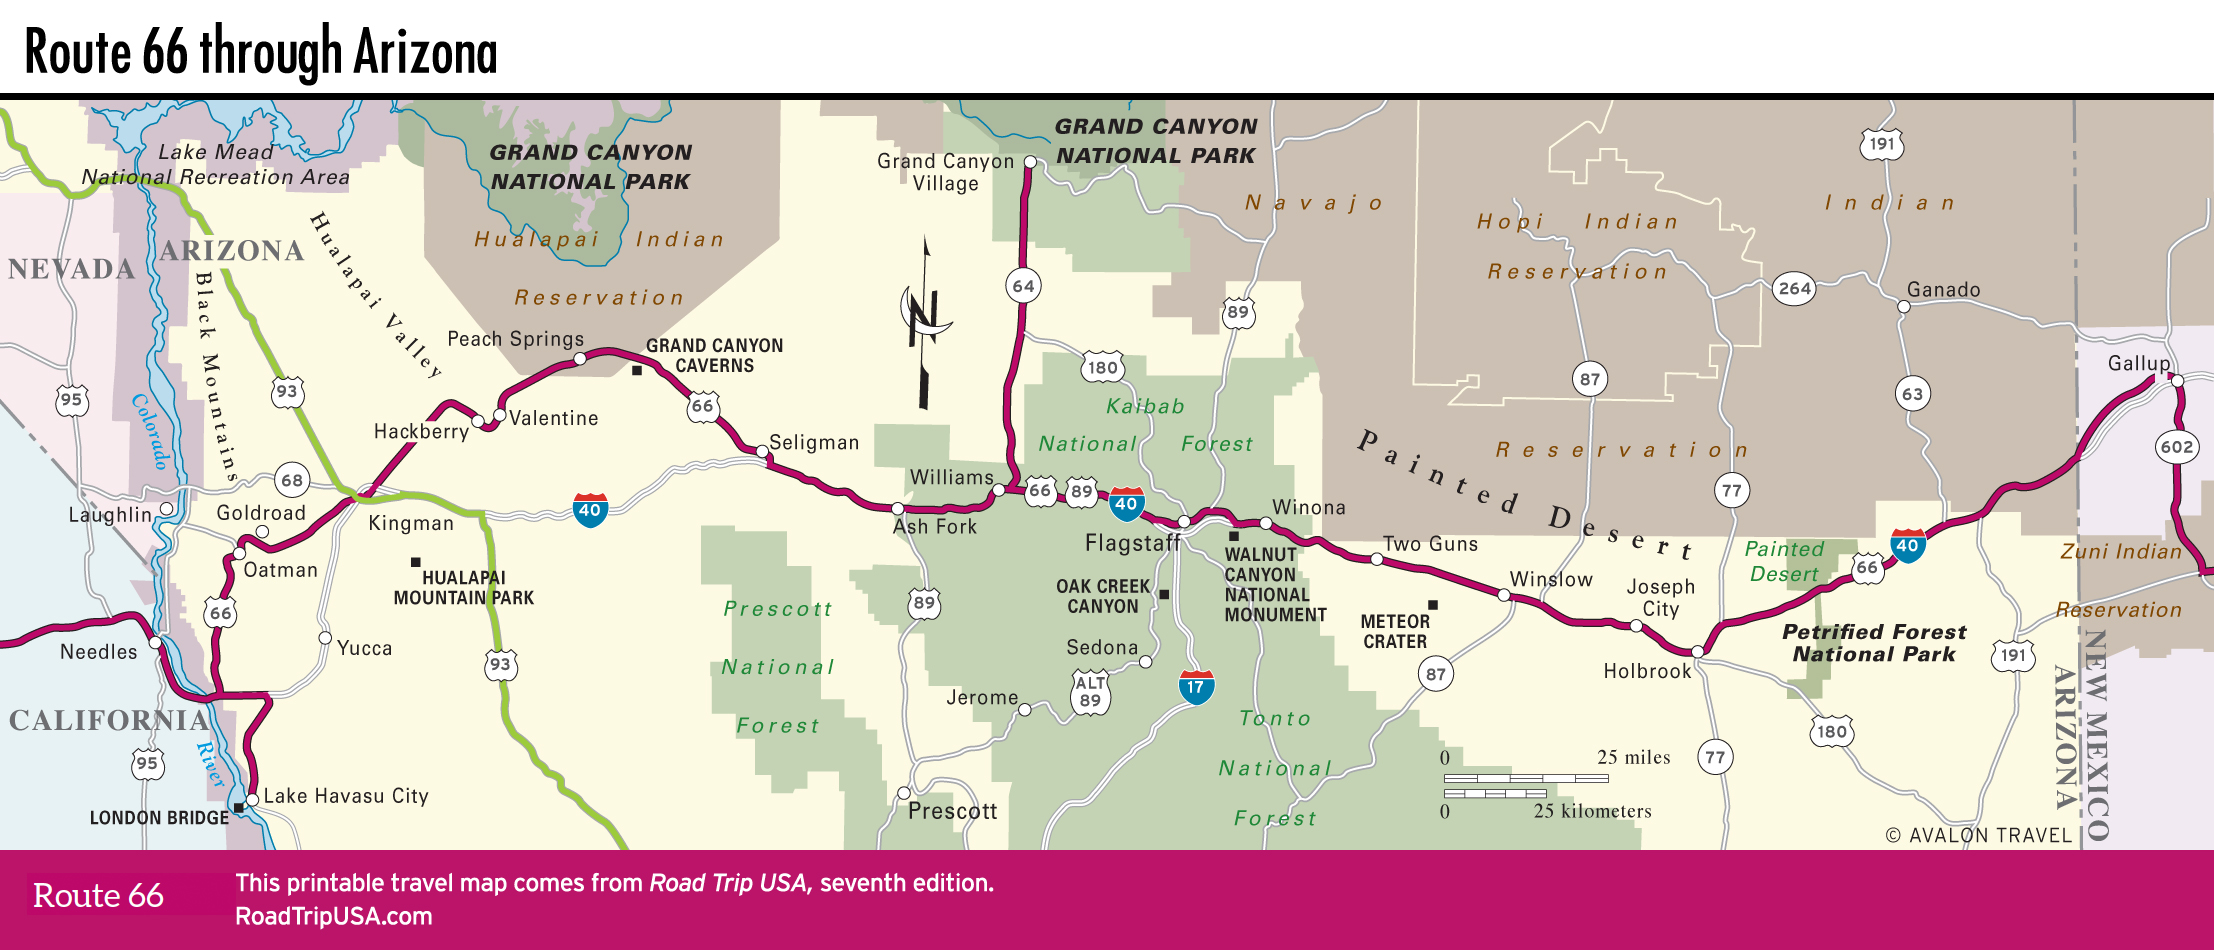 Driving Route 66 Through Arizona | ROAD TRIP USA